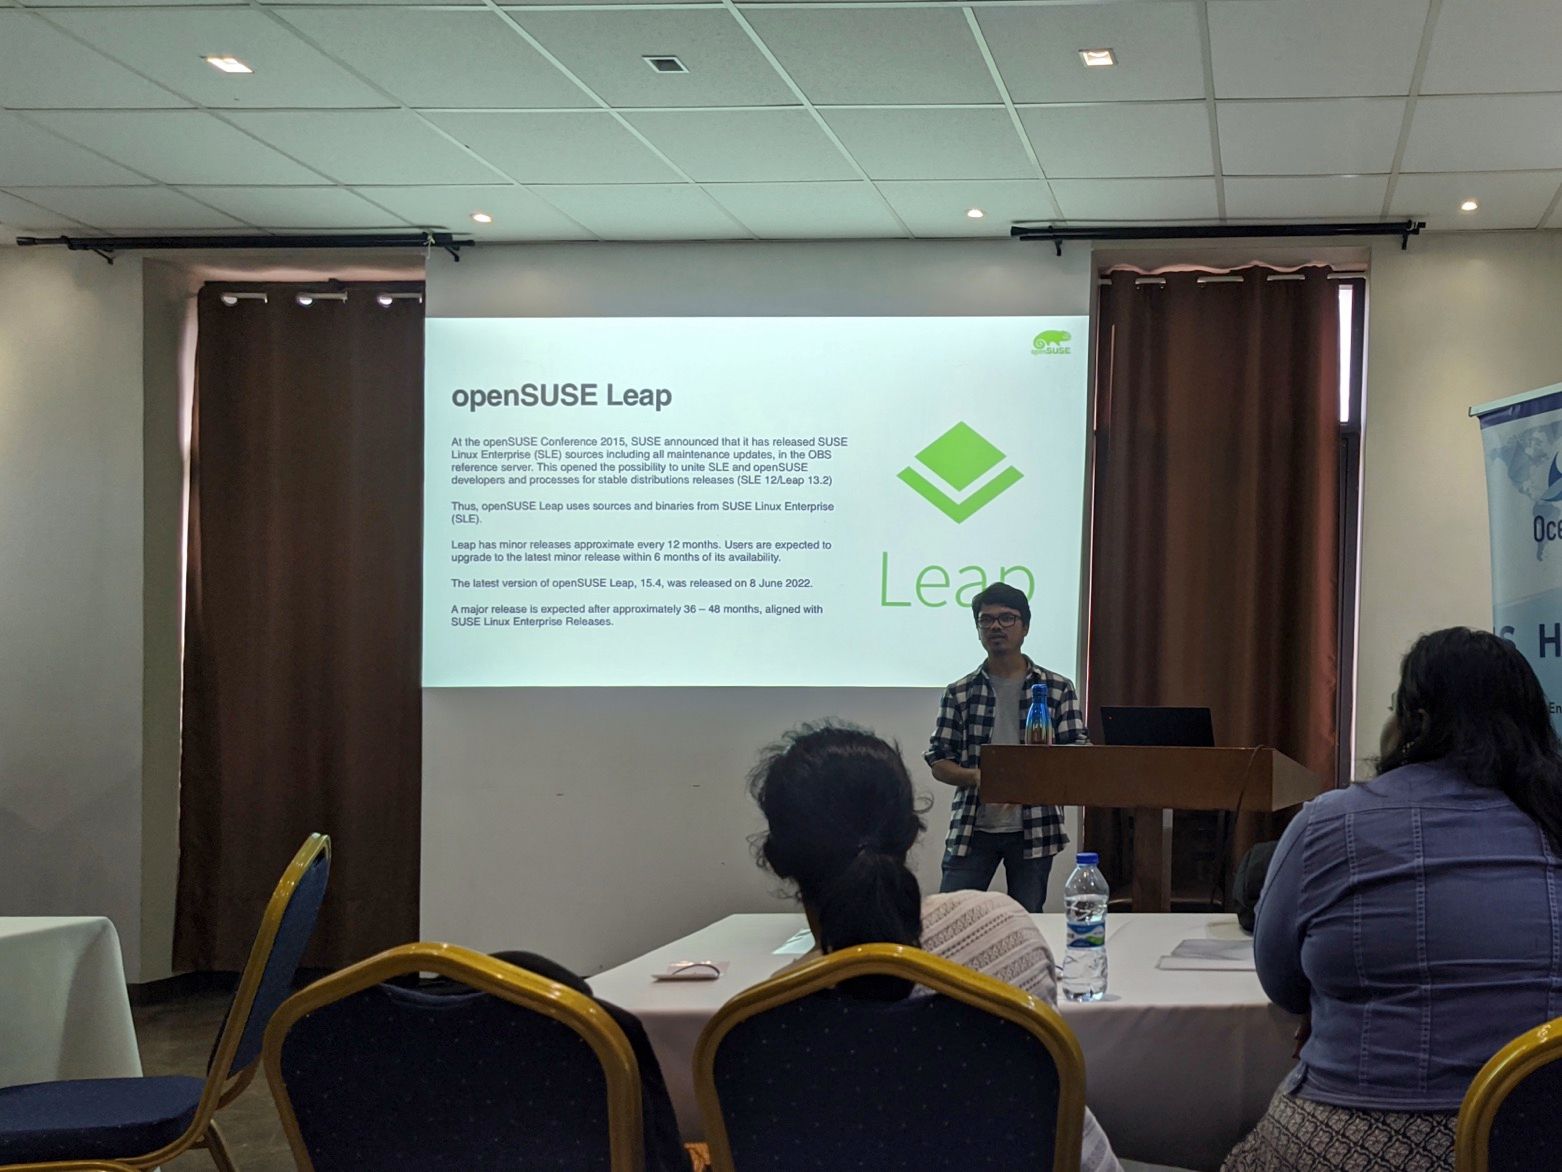 Ish Sookun talking about openSUSE Leap, photo by Neil Baichoo